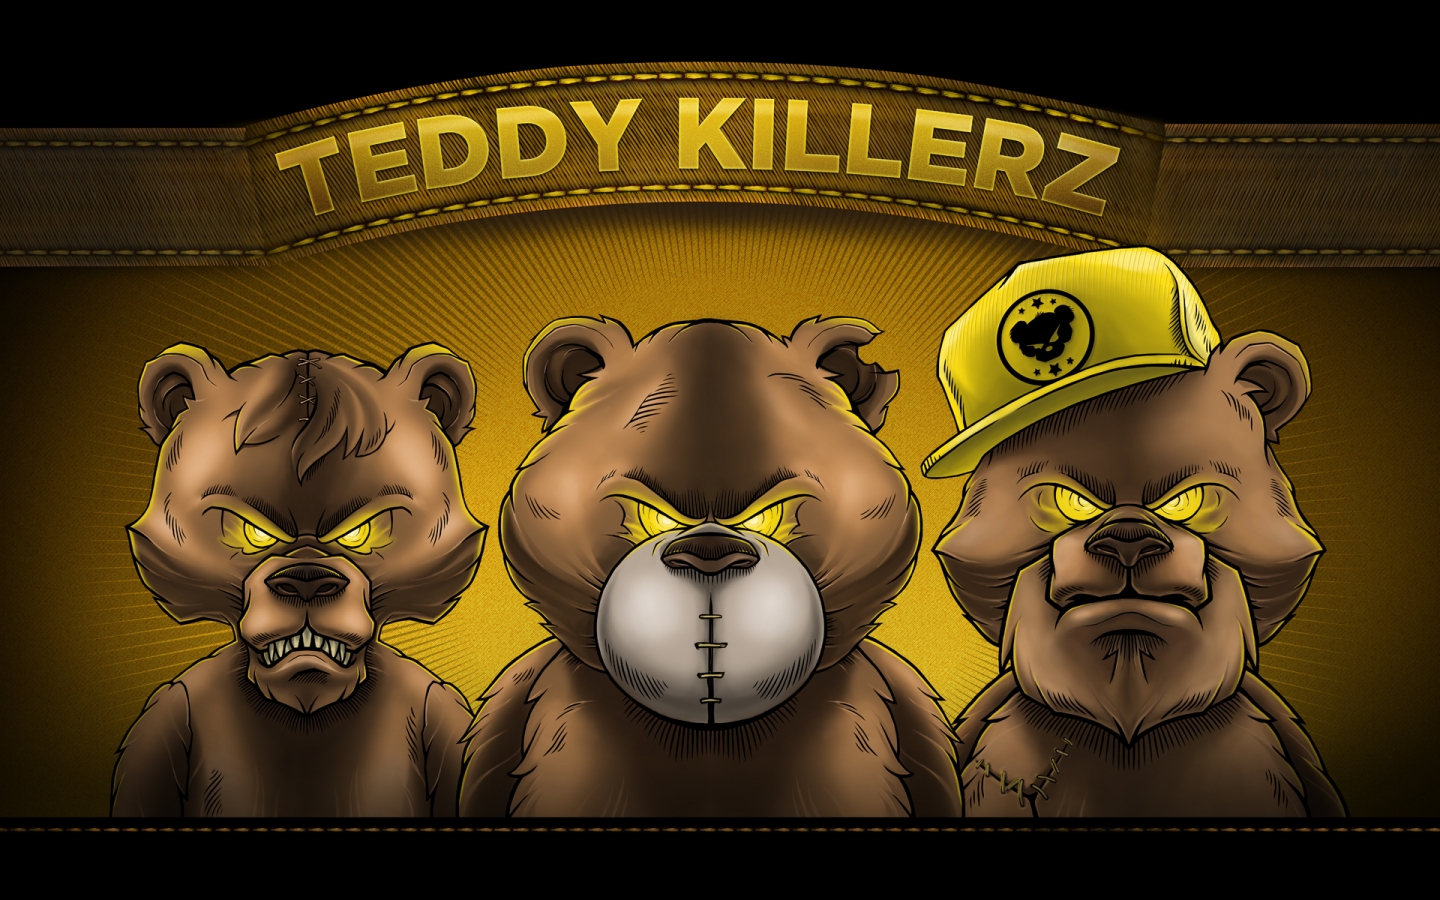 Teddy Killerz Poster for 1440 x 900 widescreen resolution